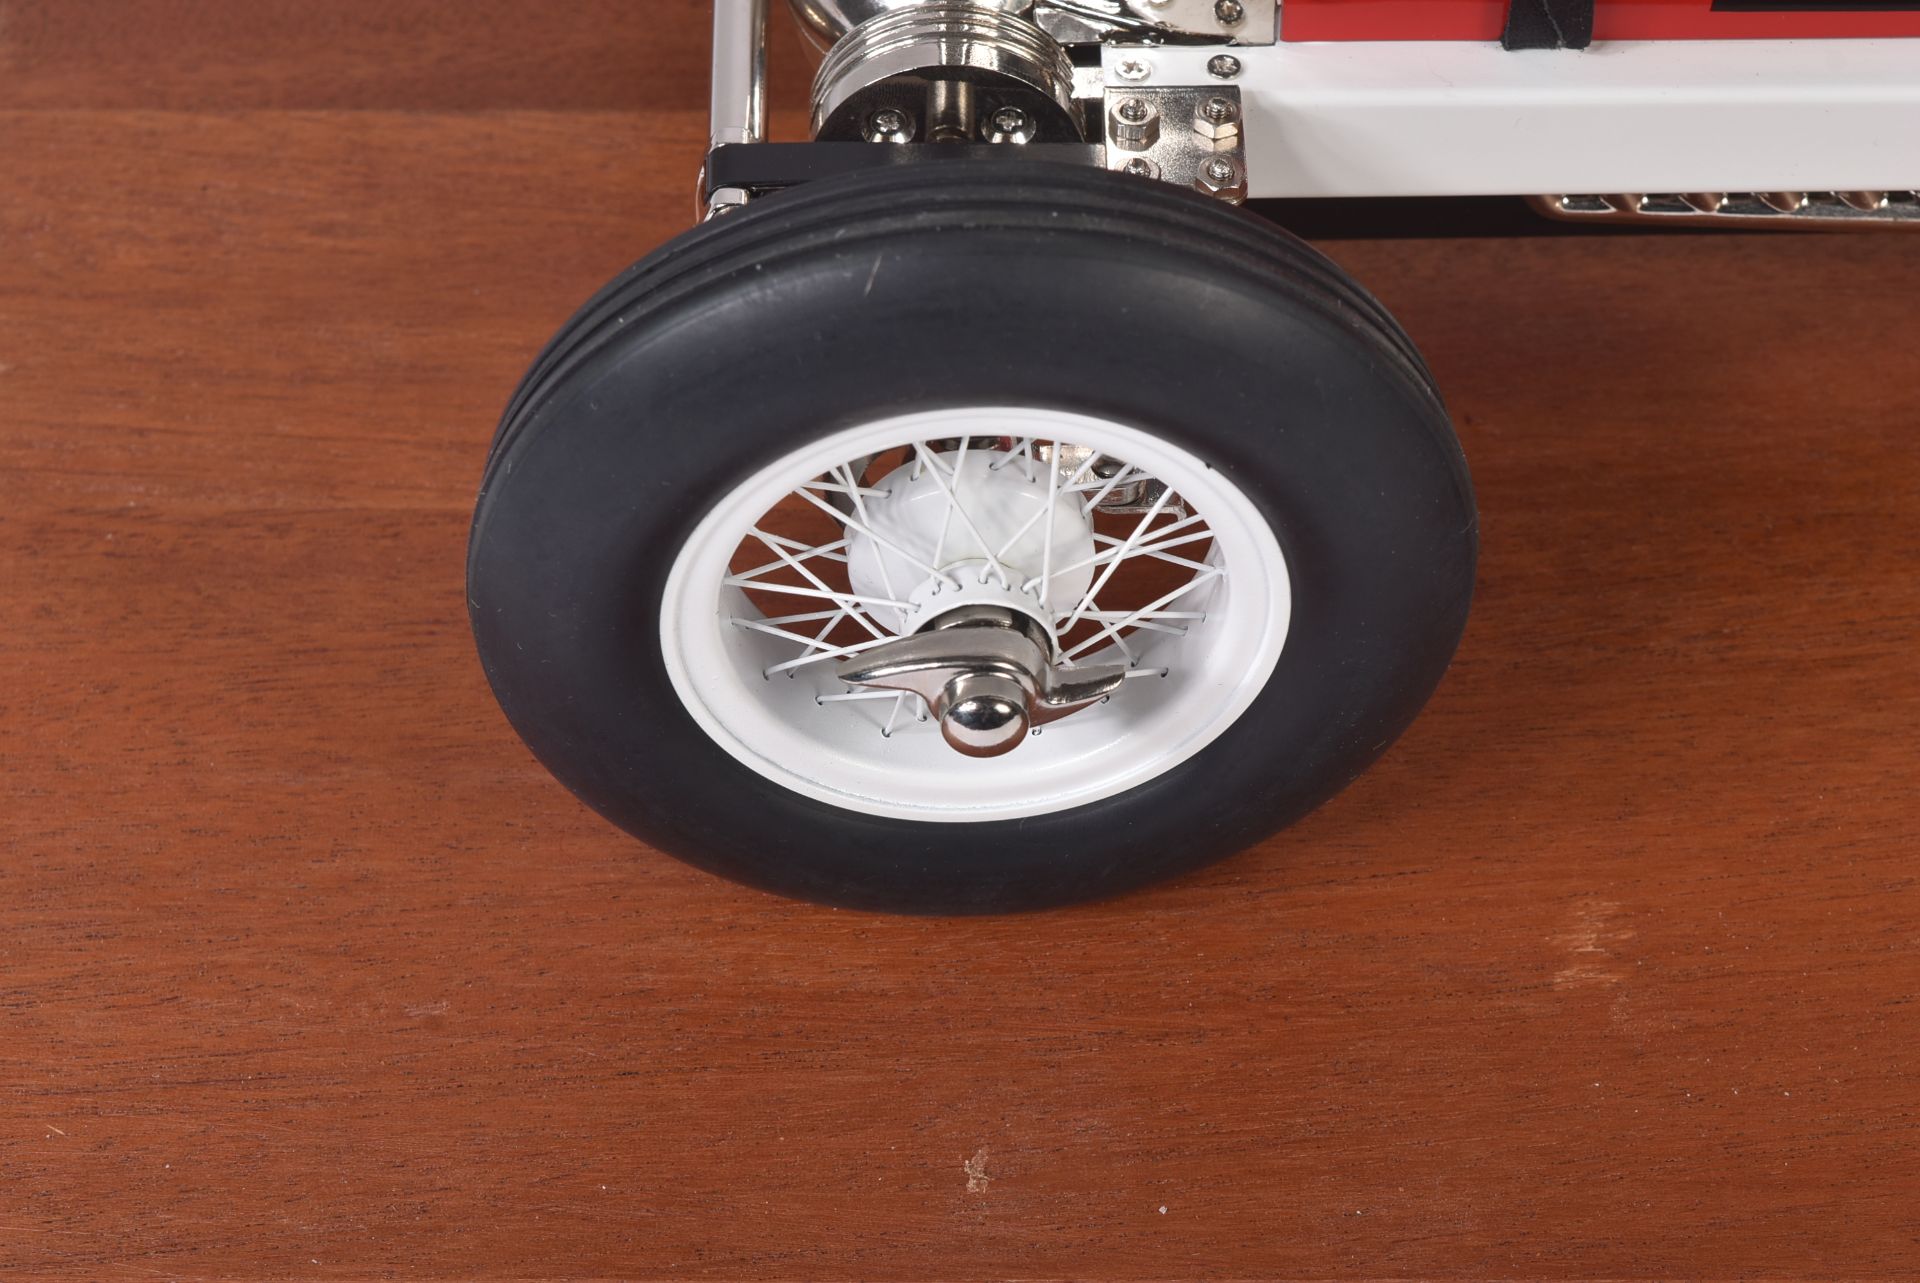 GILBOW 1/8 SCALE CLOCKWORK MODEL RACE CAR - Image 7 of 8